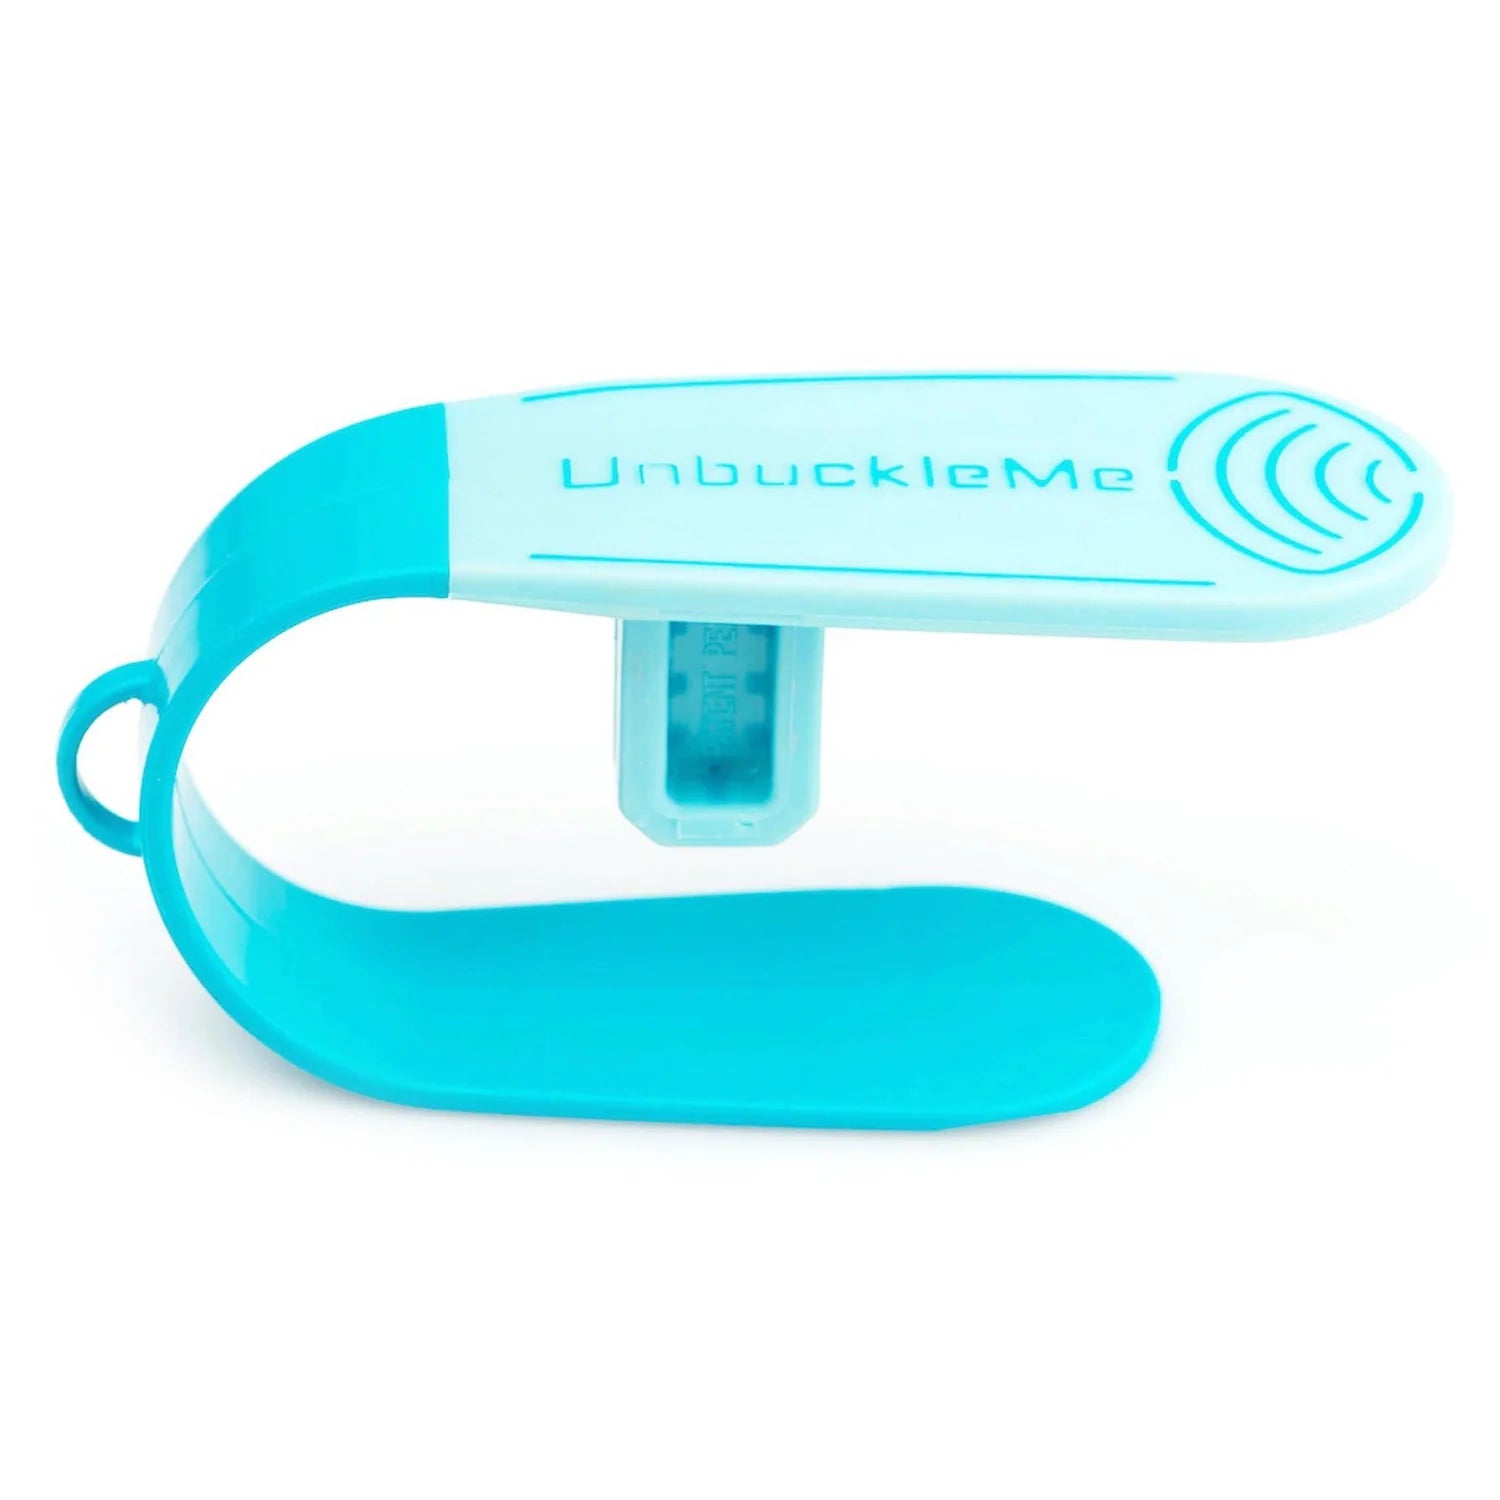 UnbuckleMe Car Seat Buckle Release Tool - SuperMom Headquarters